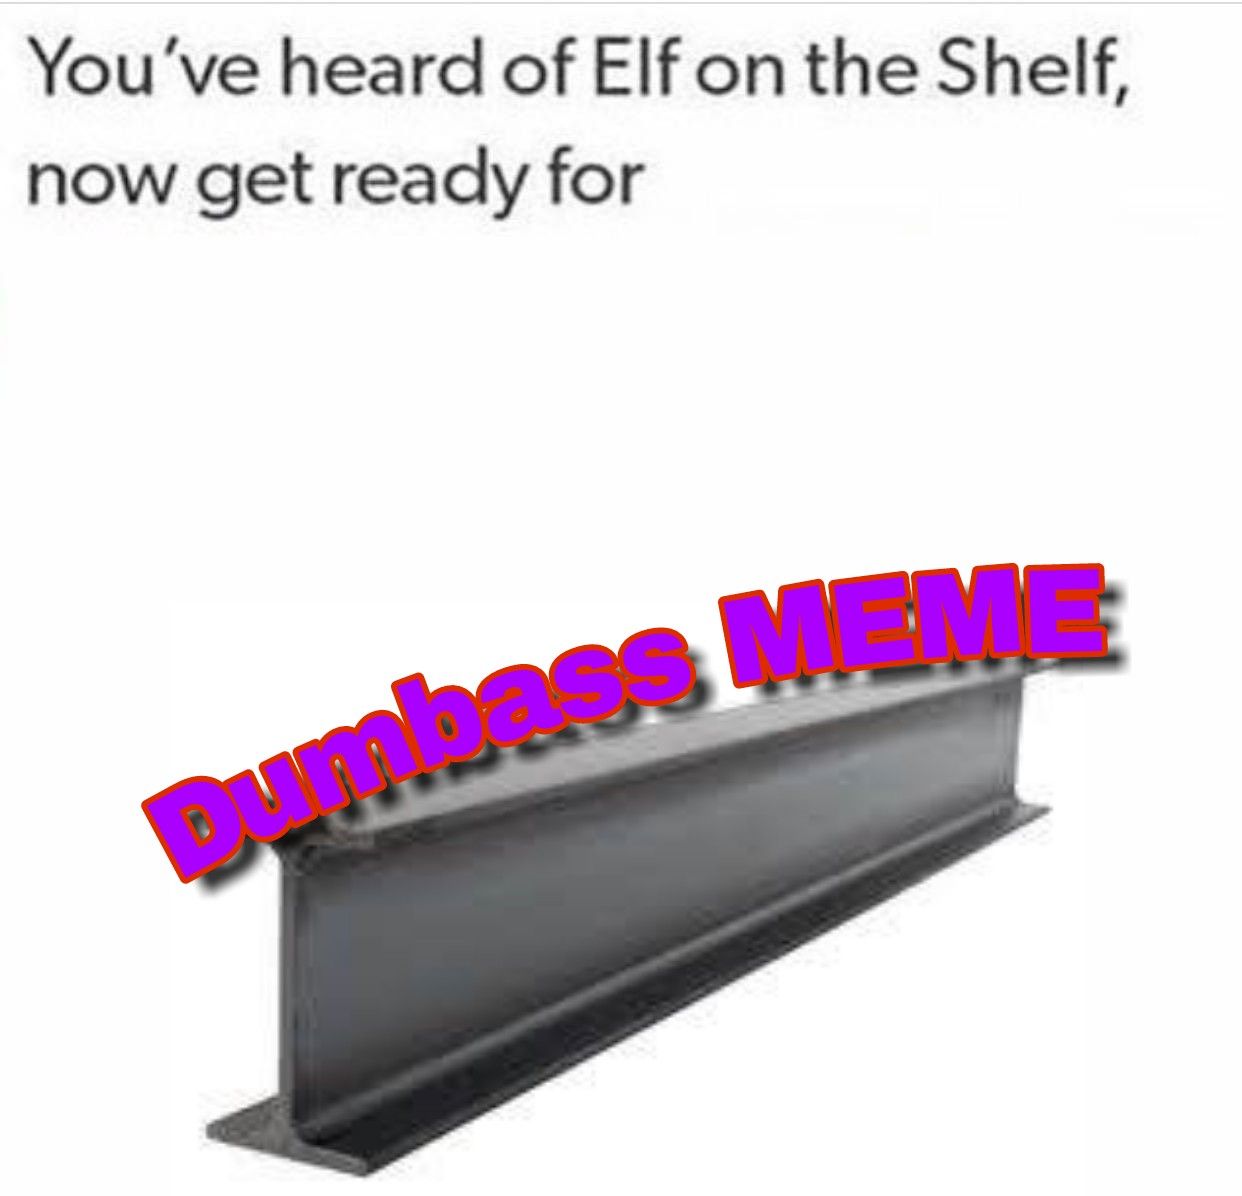 Elf on a shelf and now a meme on a beam